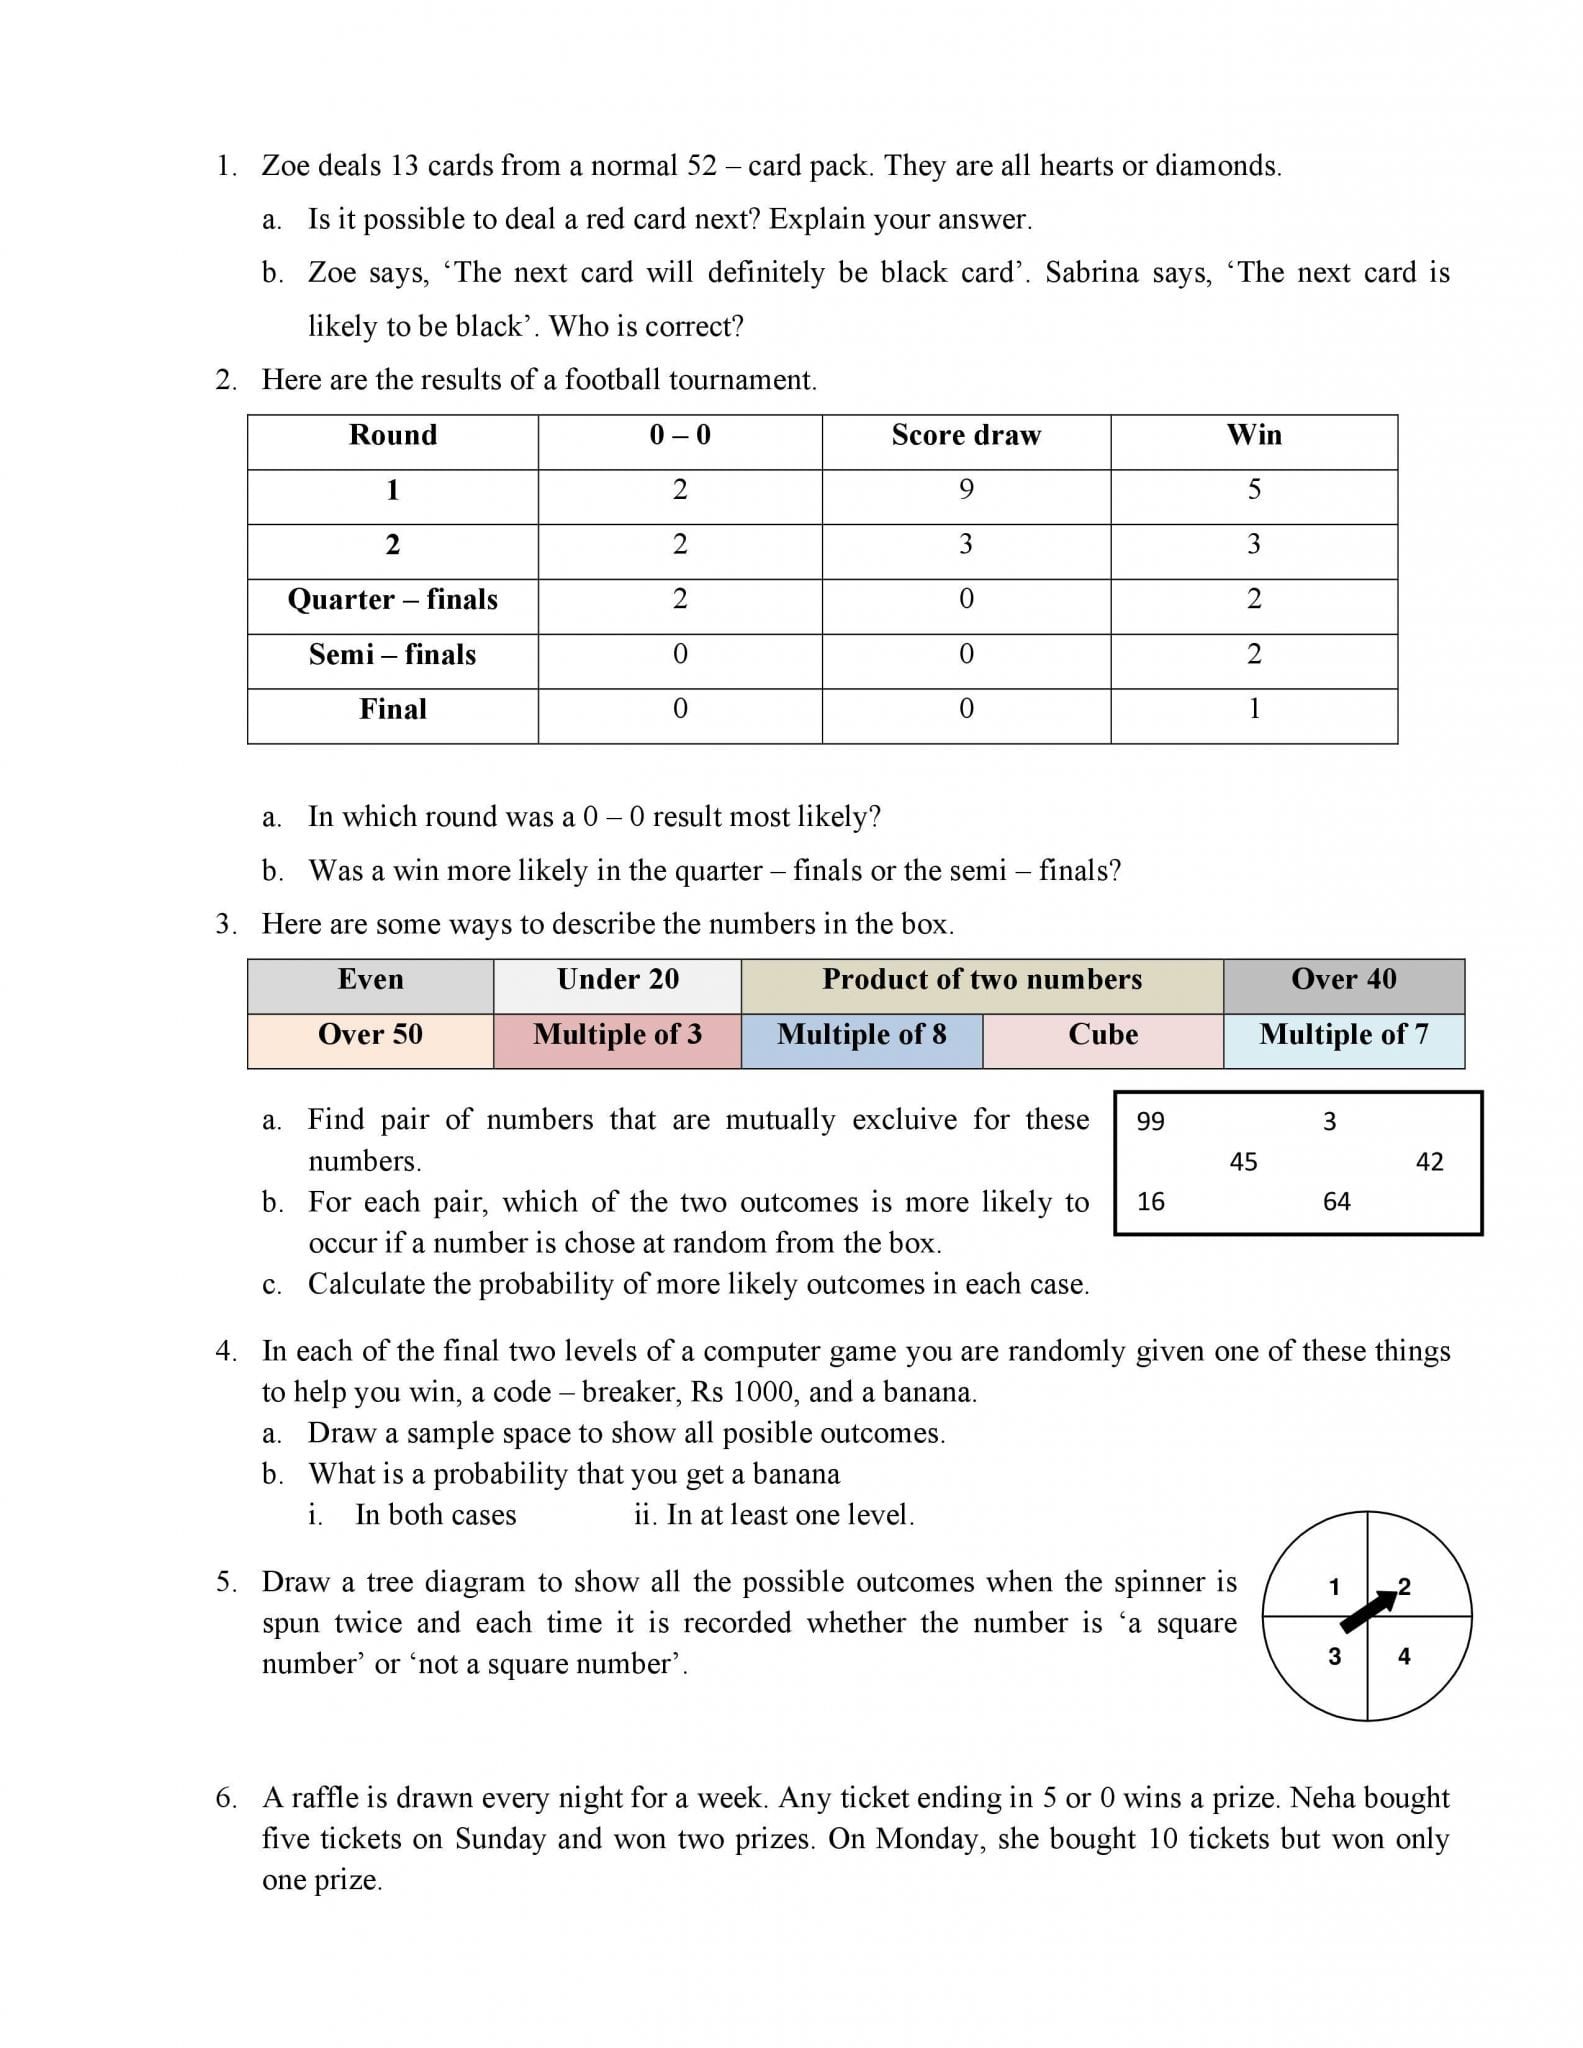 Translating Algebraic Expressions Worksheet